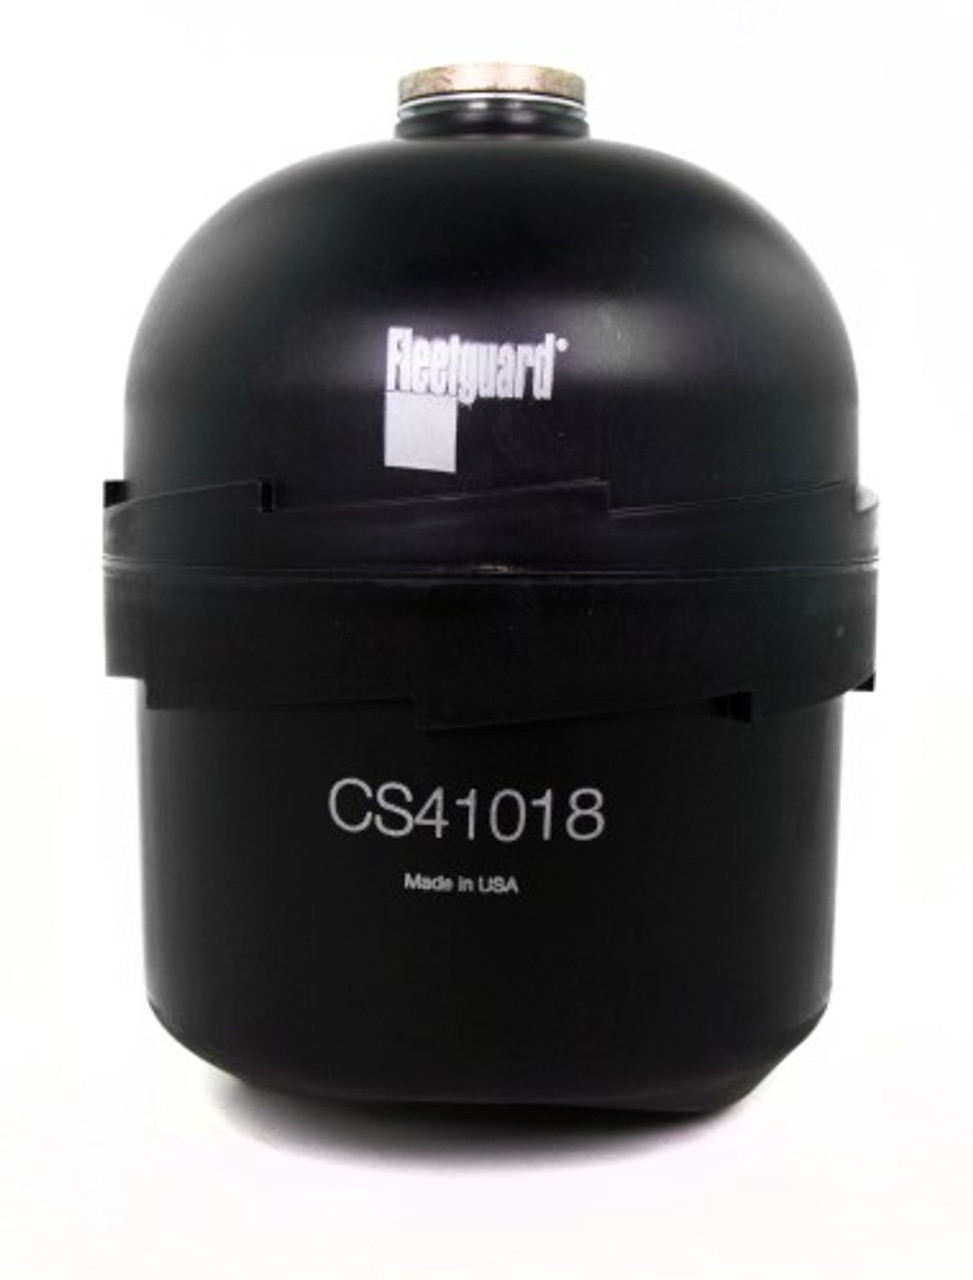 CS41018: Fleetguard Lube Centrifugal By-Pass Filter